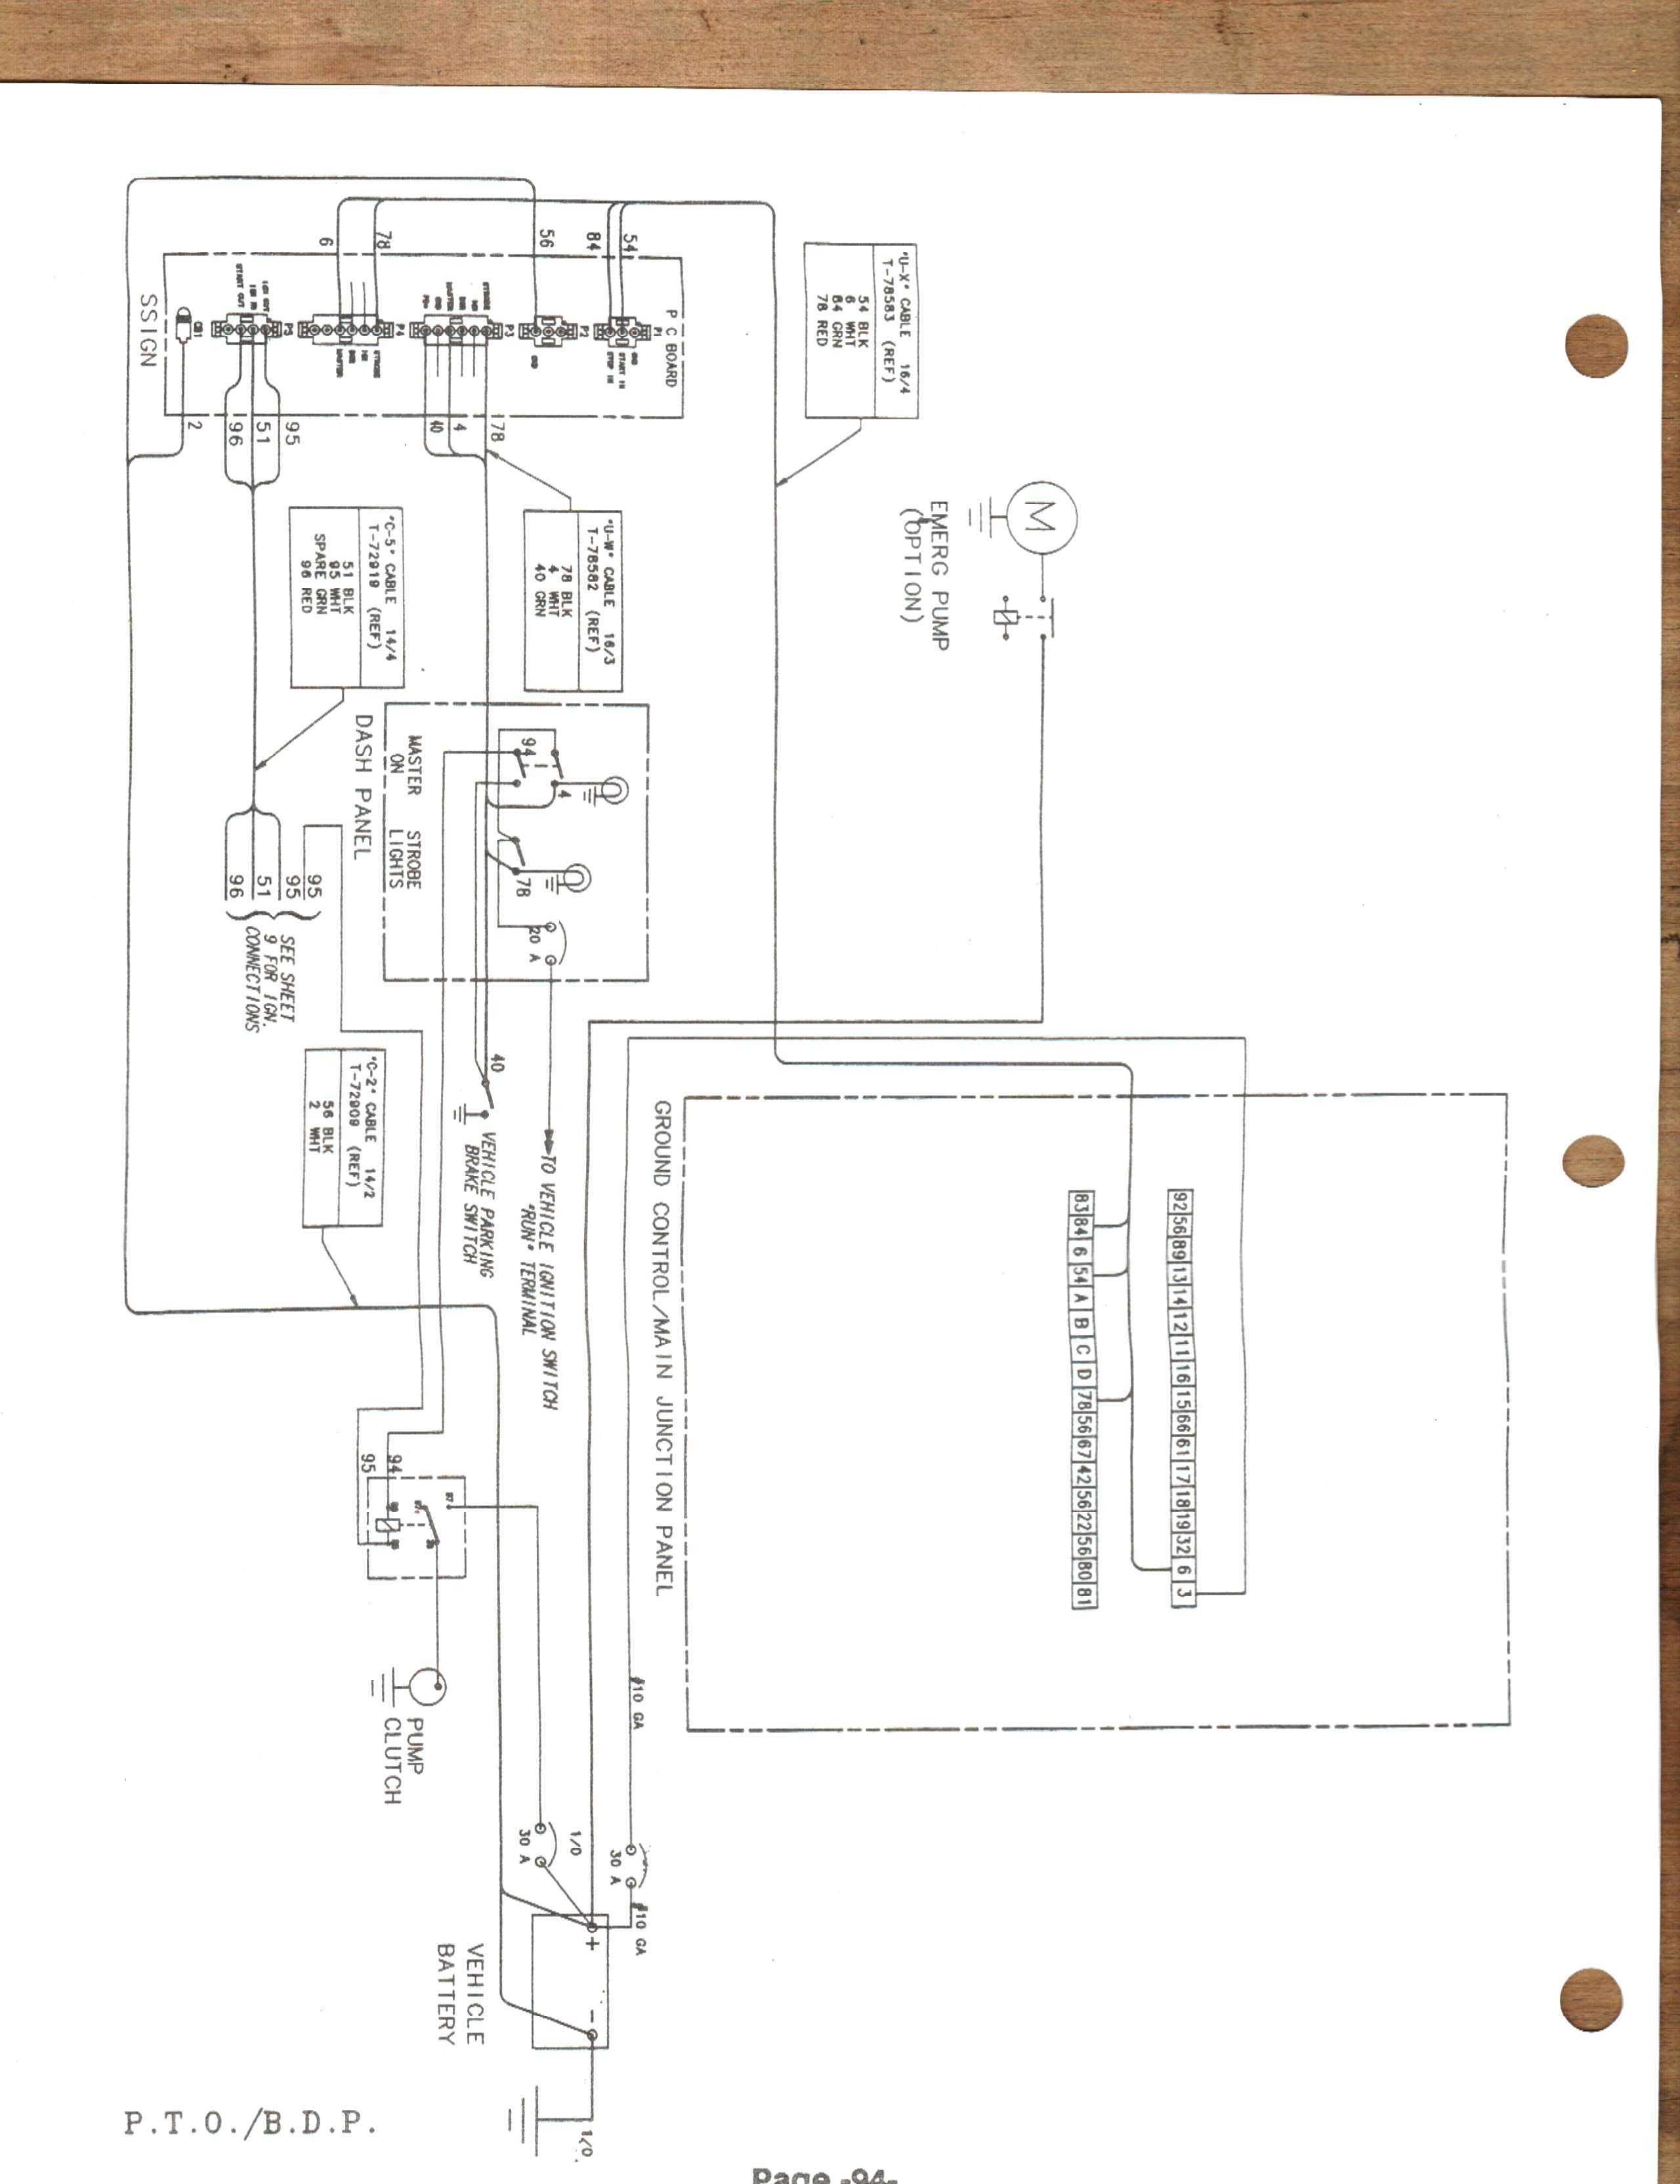 telsta wiring diagram wiring diagramsTelsta Lift Wiring Diagram 1